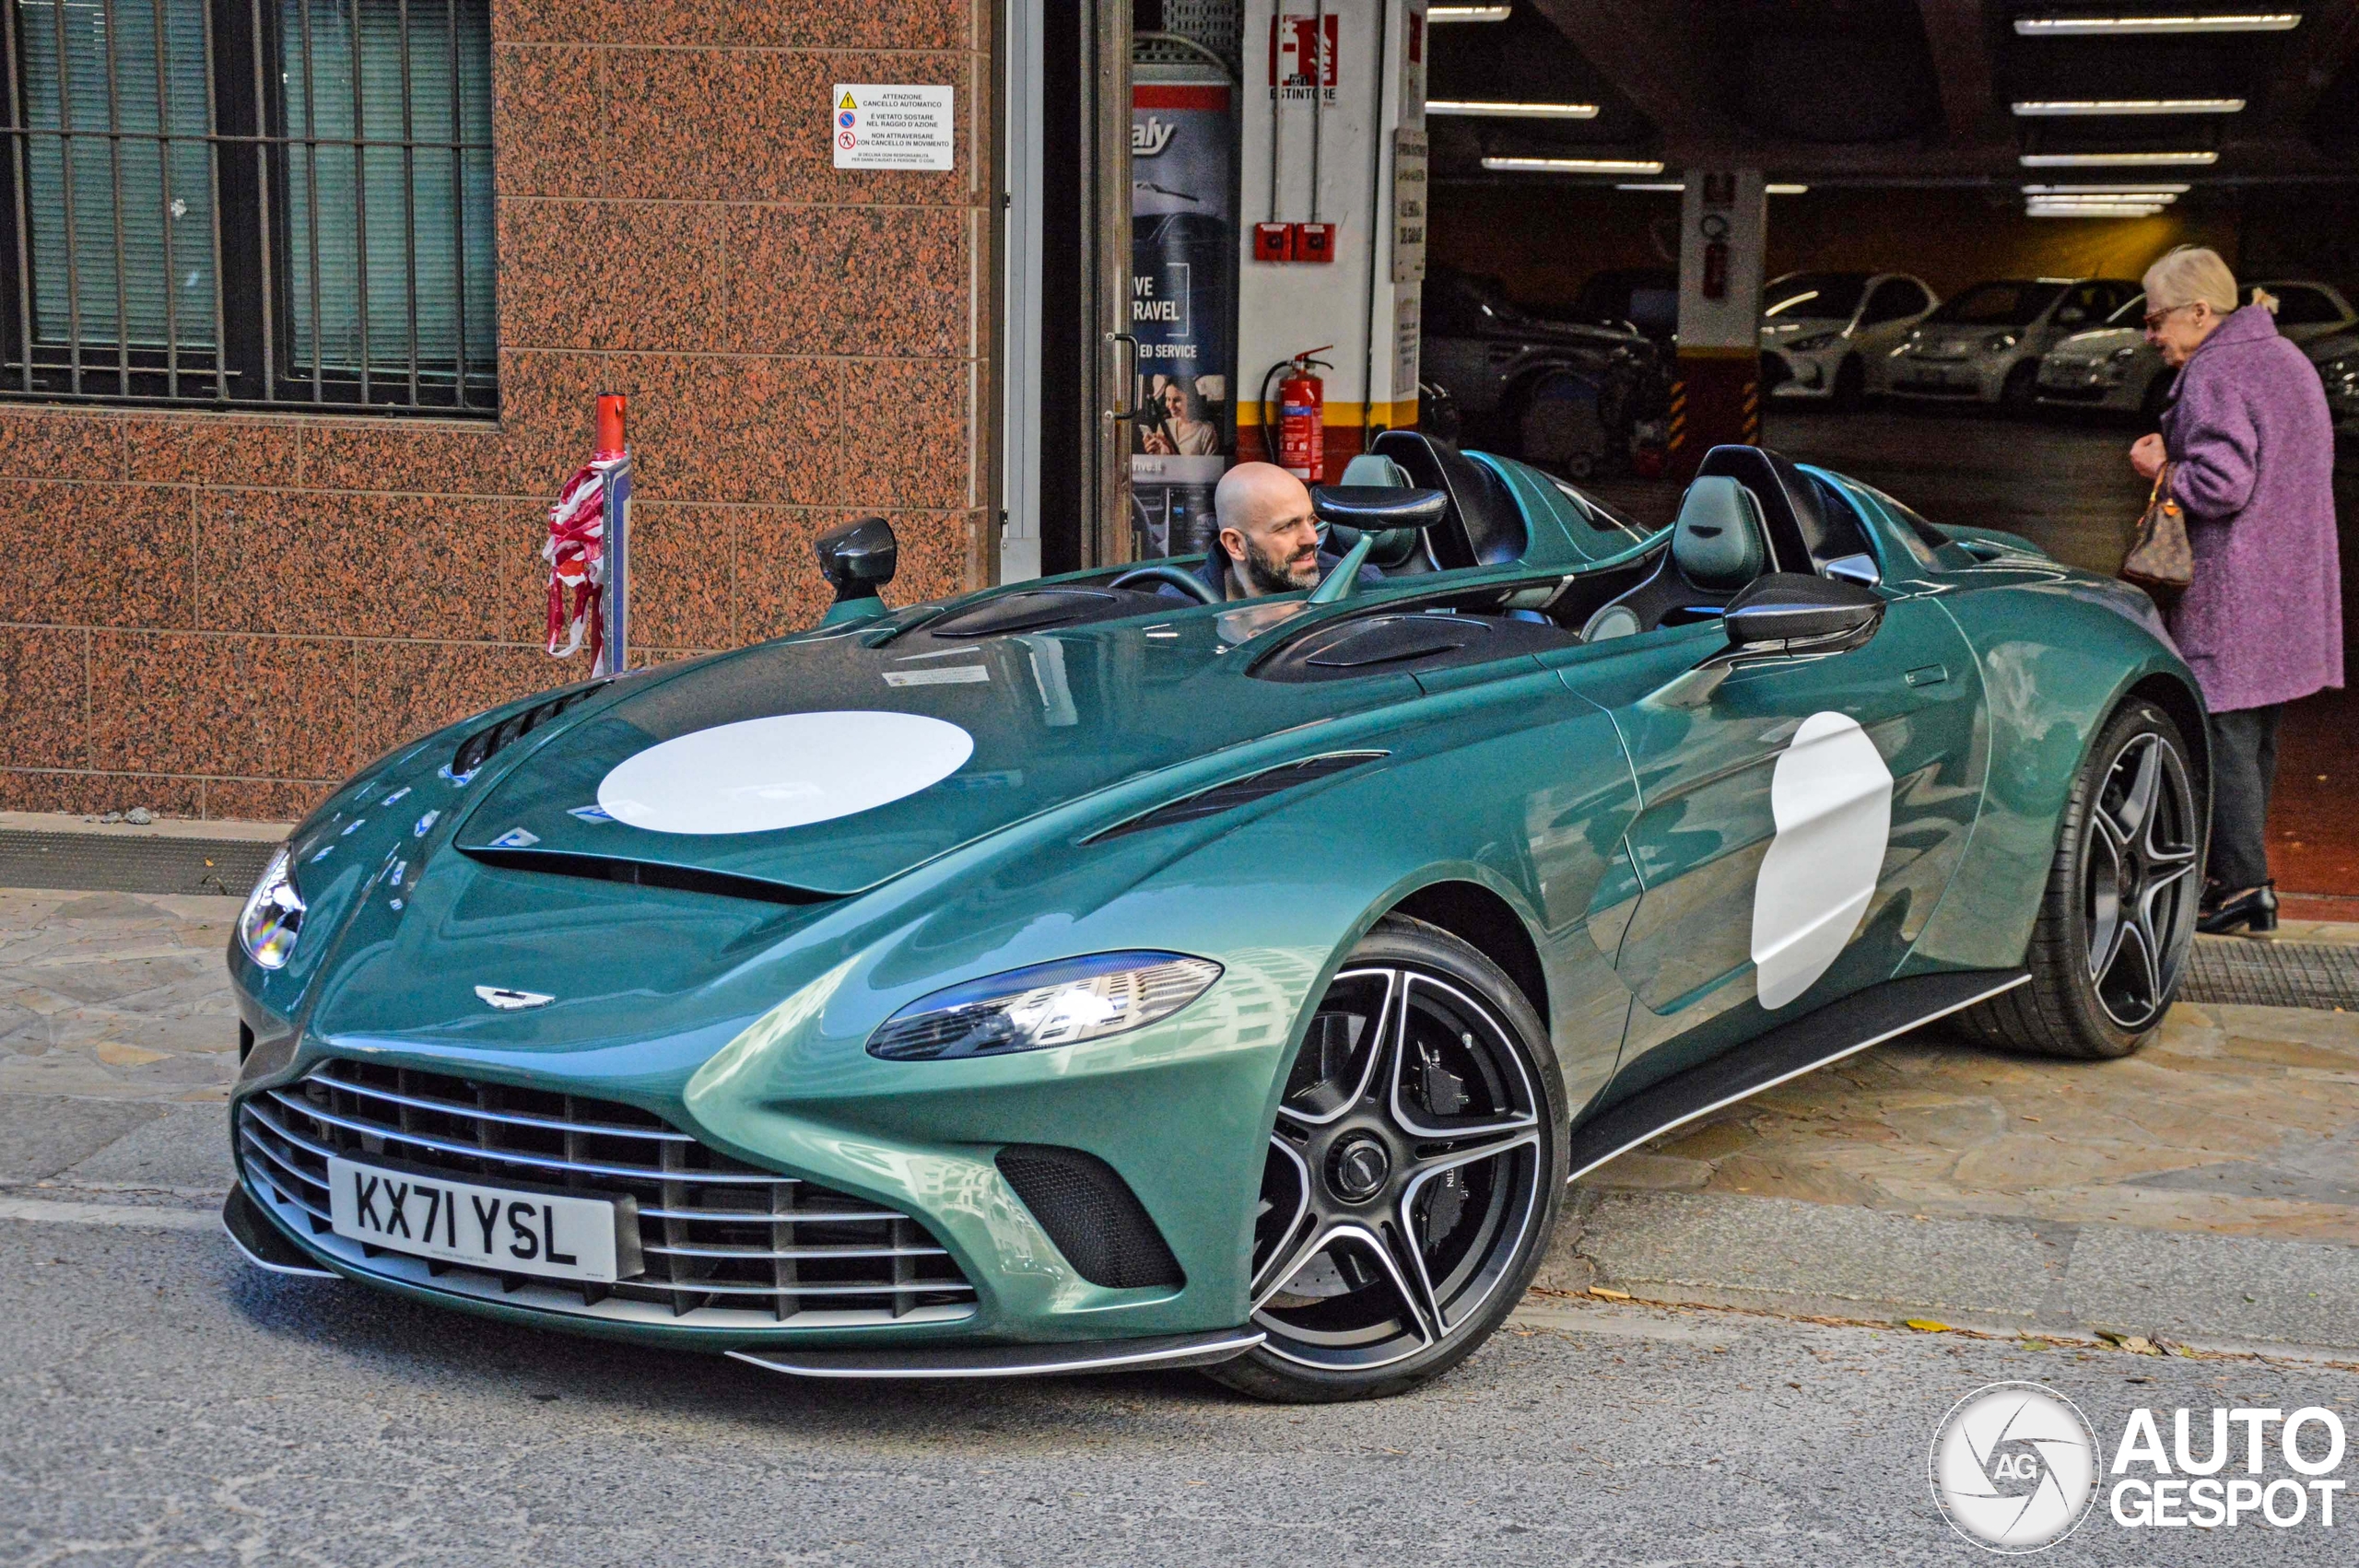 Were Aston Martin V12 Speedster drivers deceived?